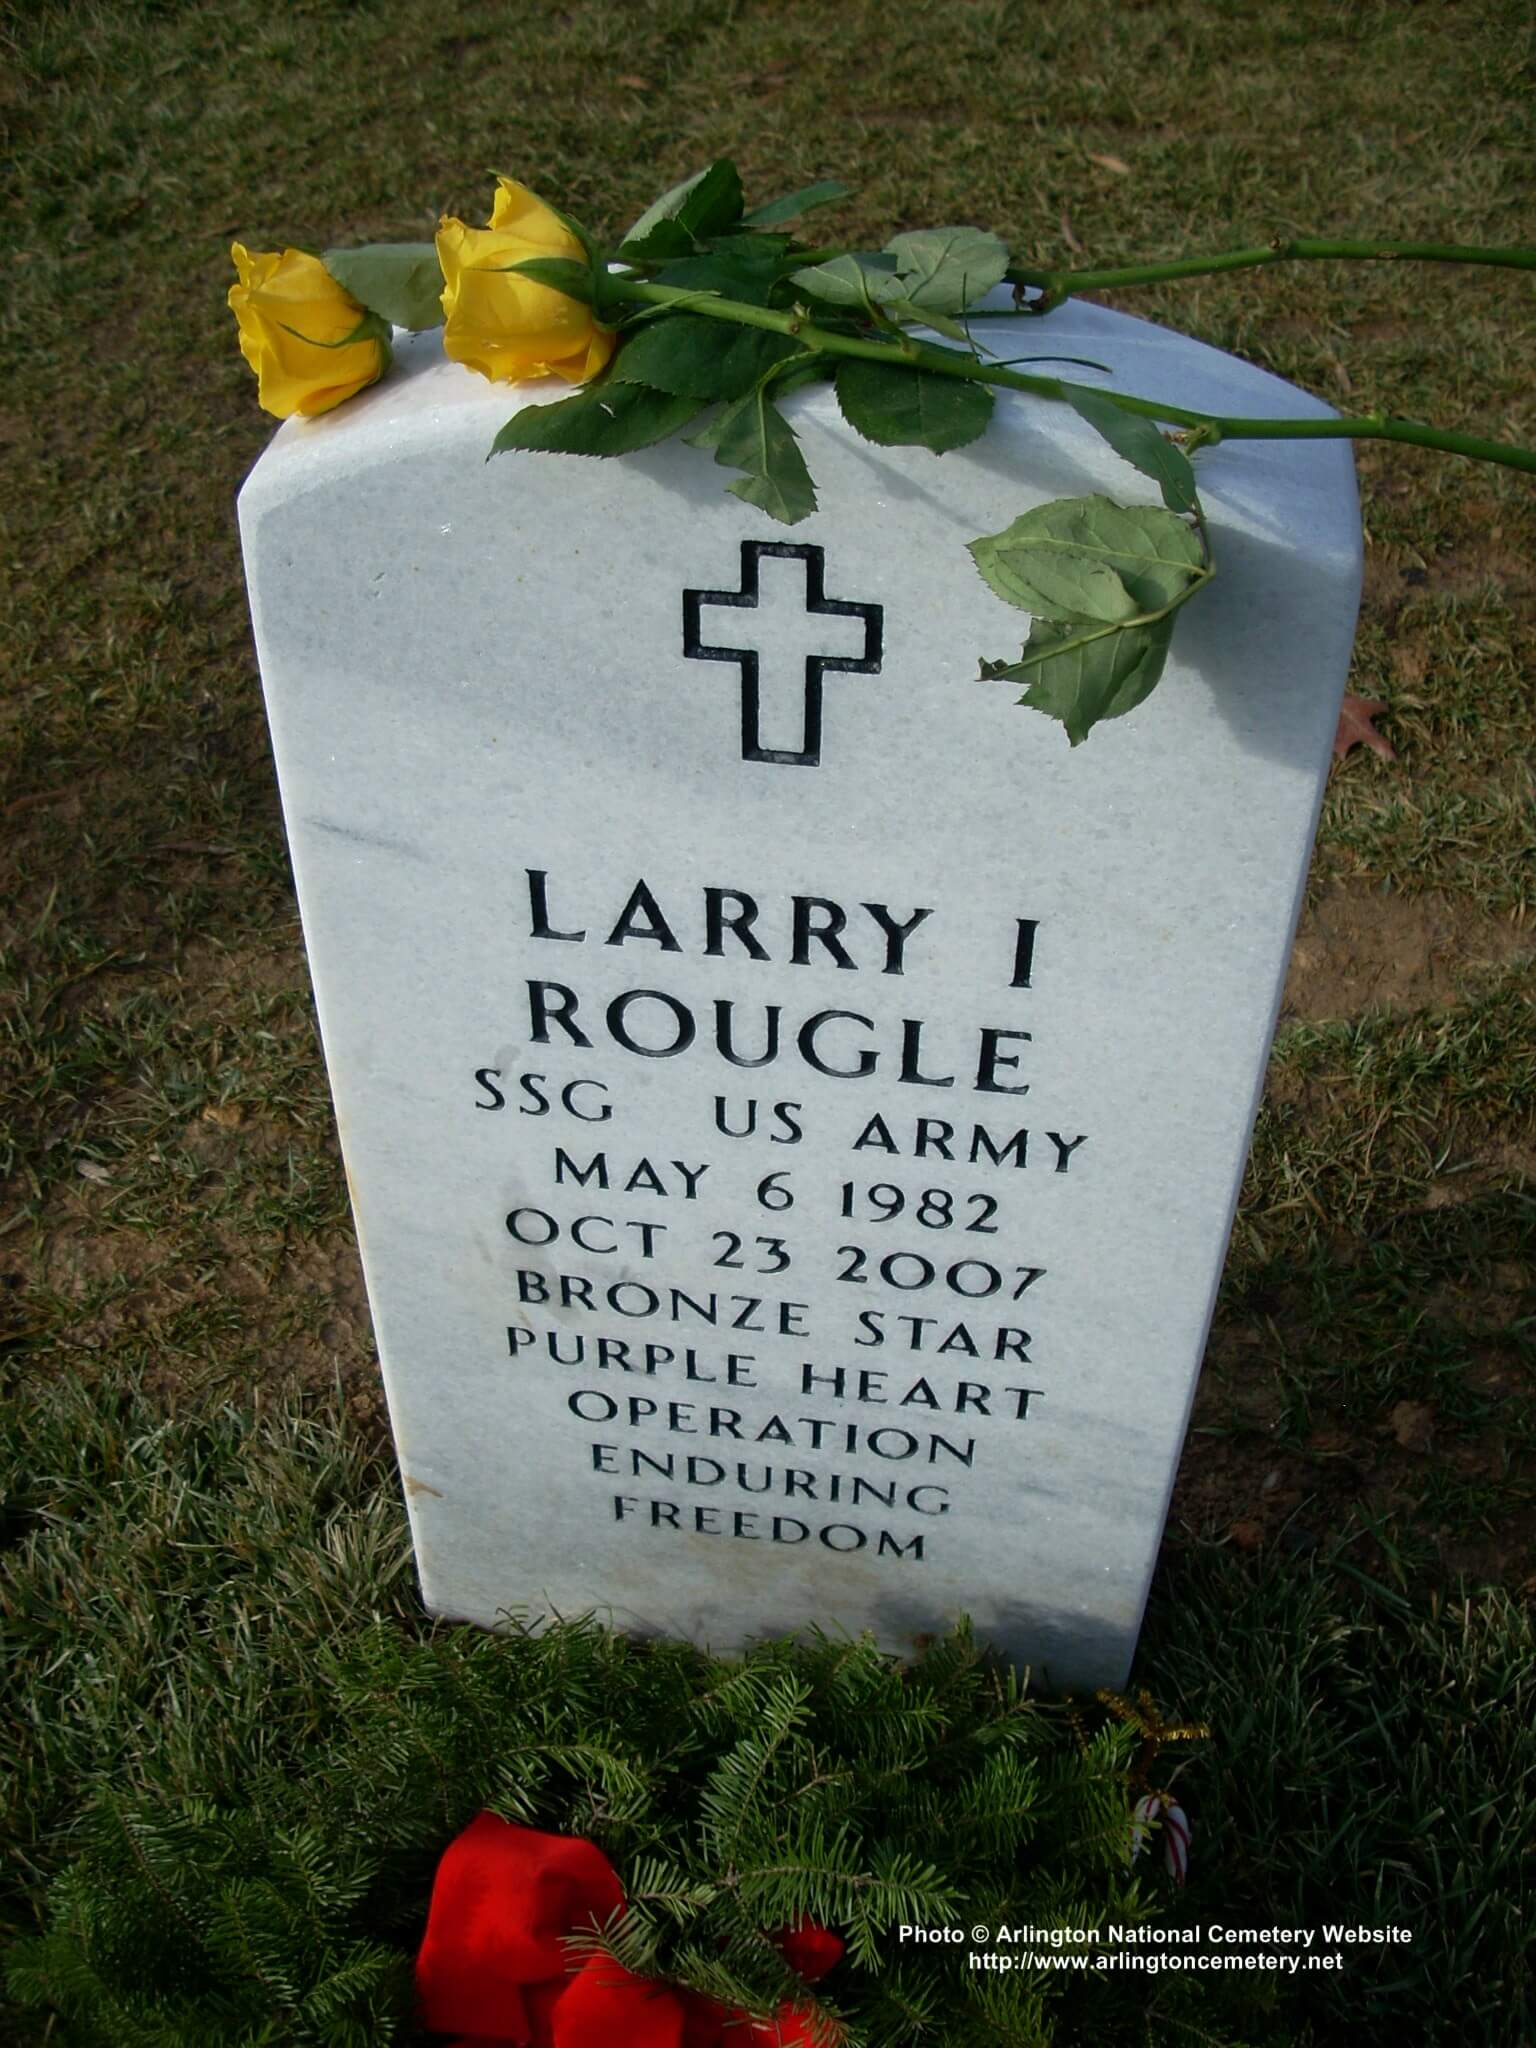 lirougle-gravesite-photo-december-2007-002